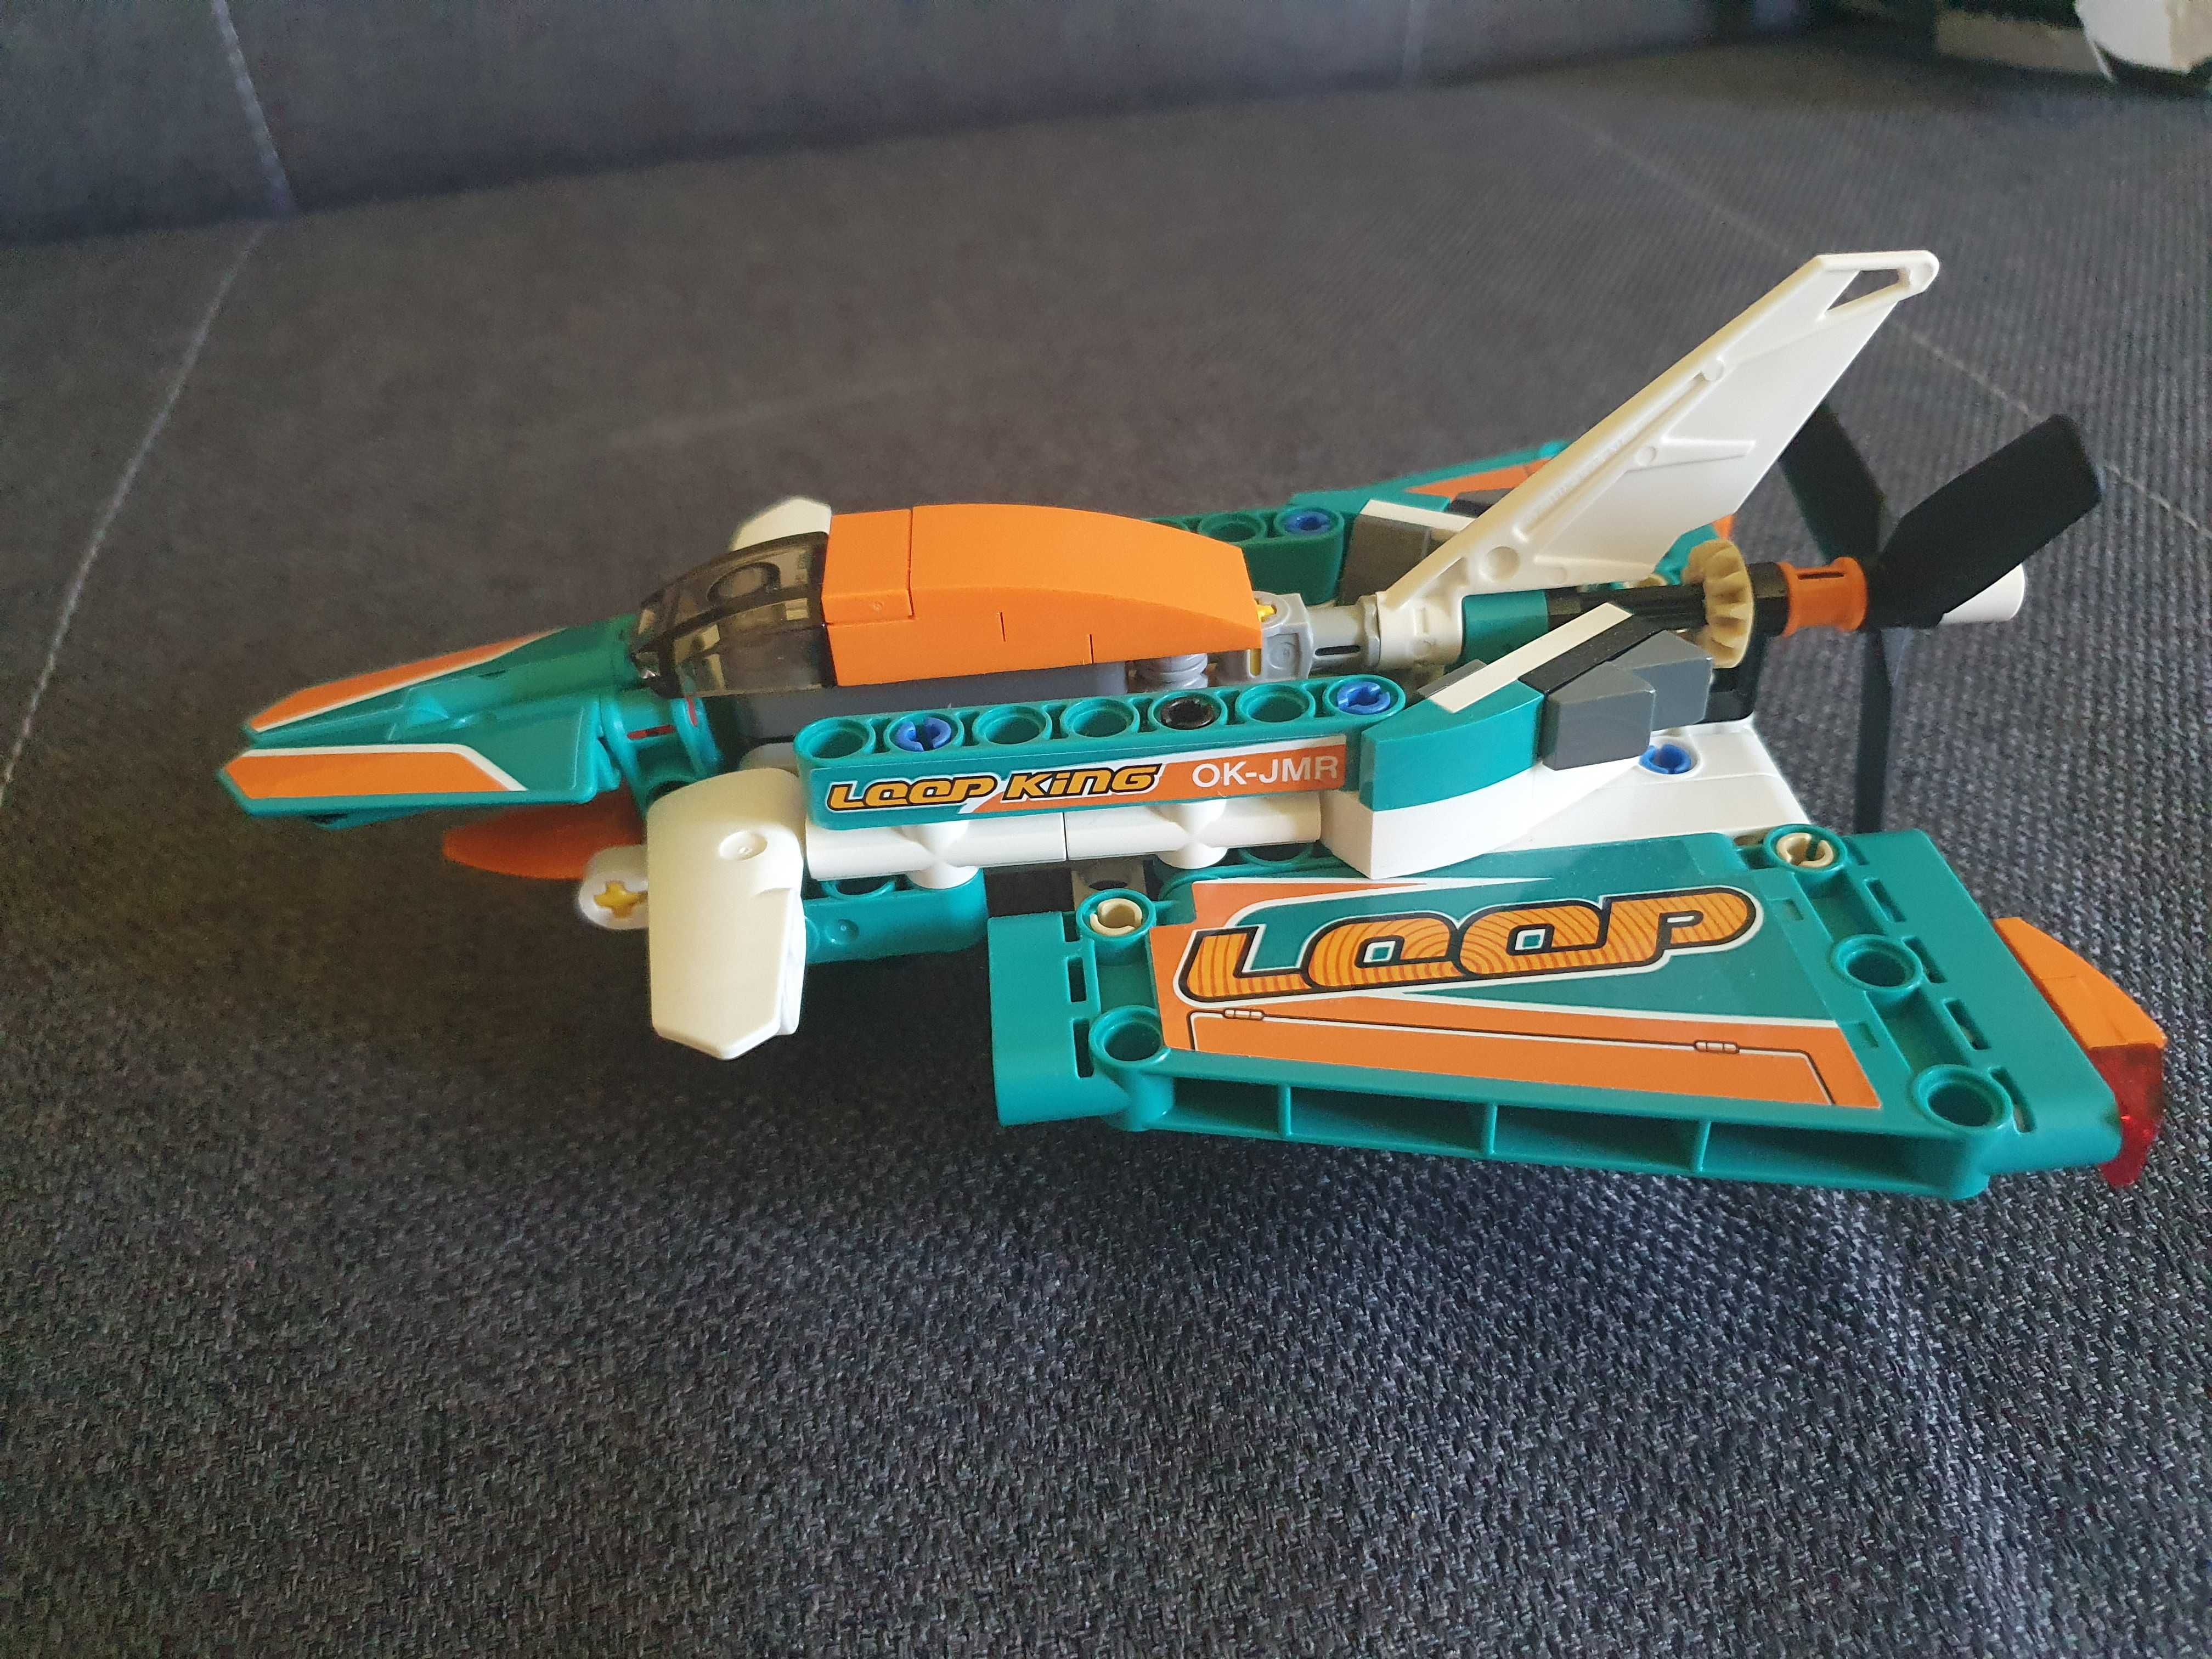 Lego technic 42117